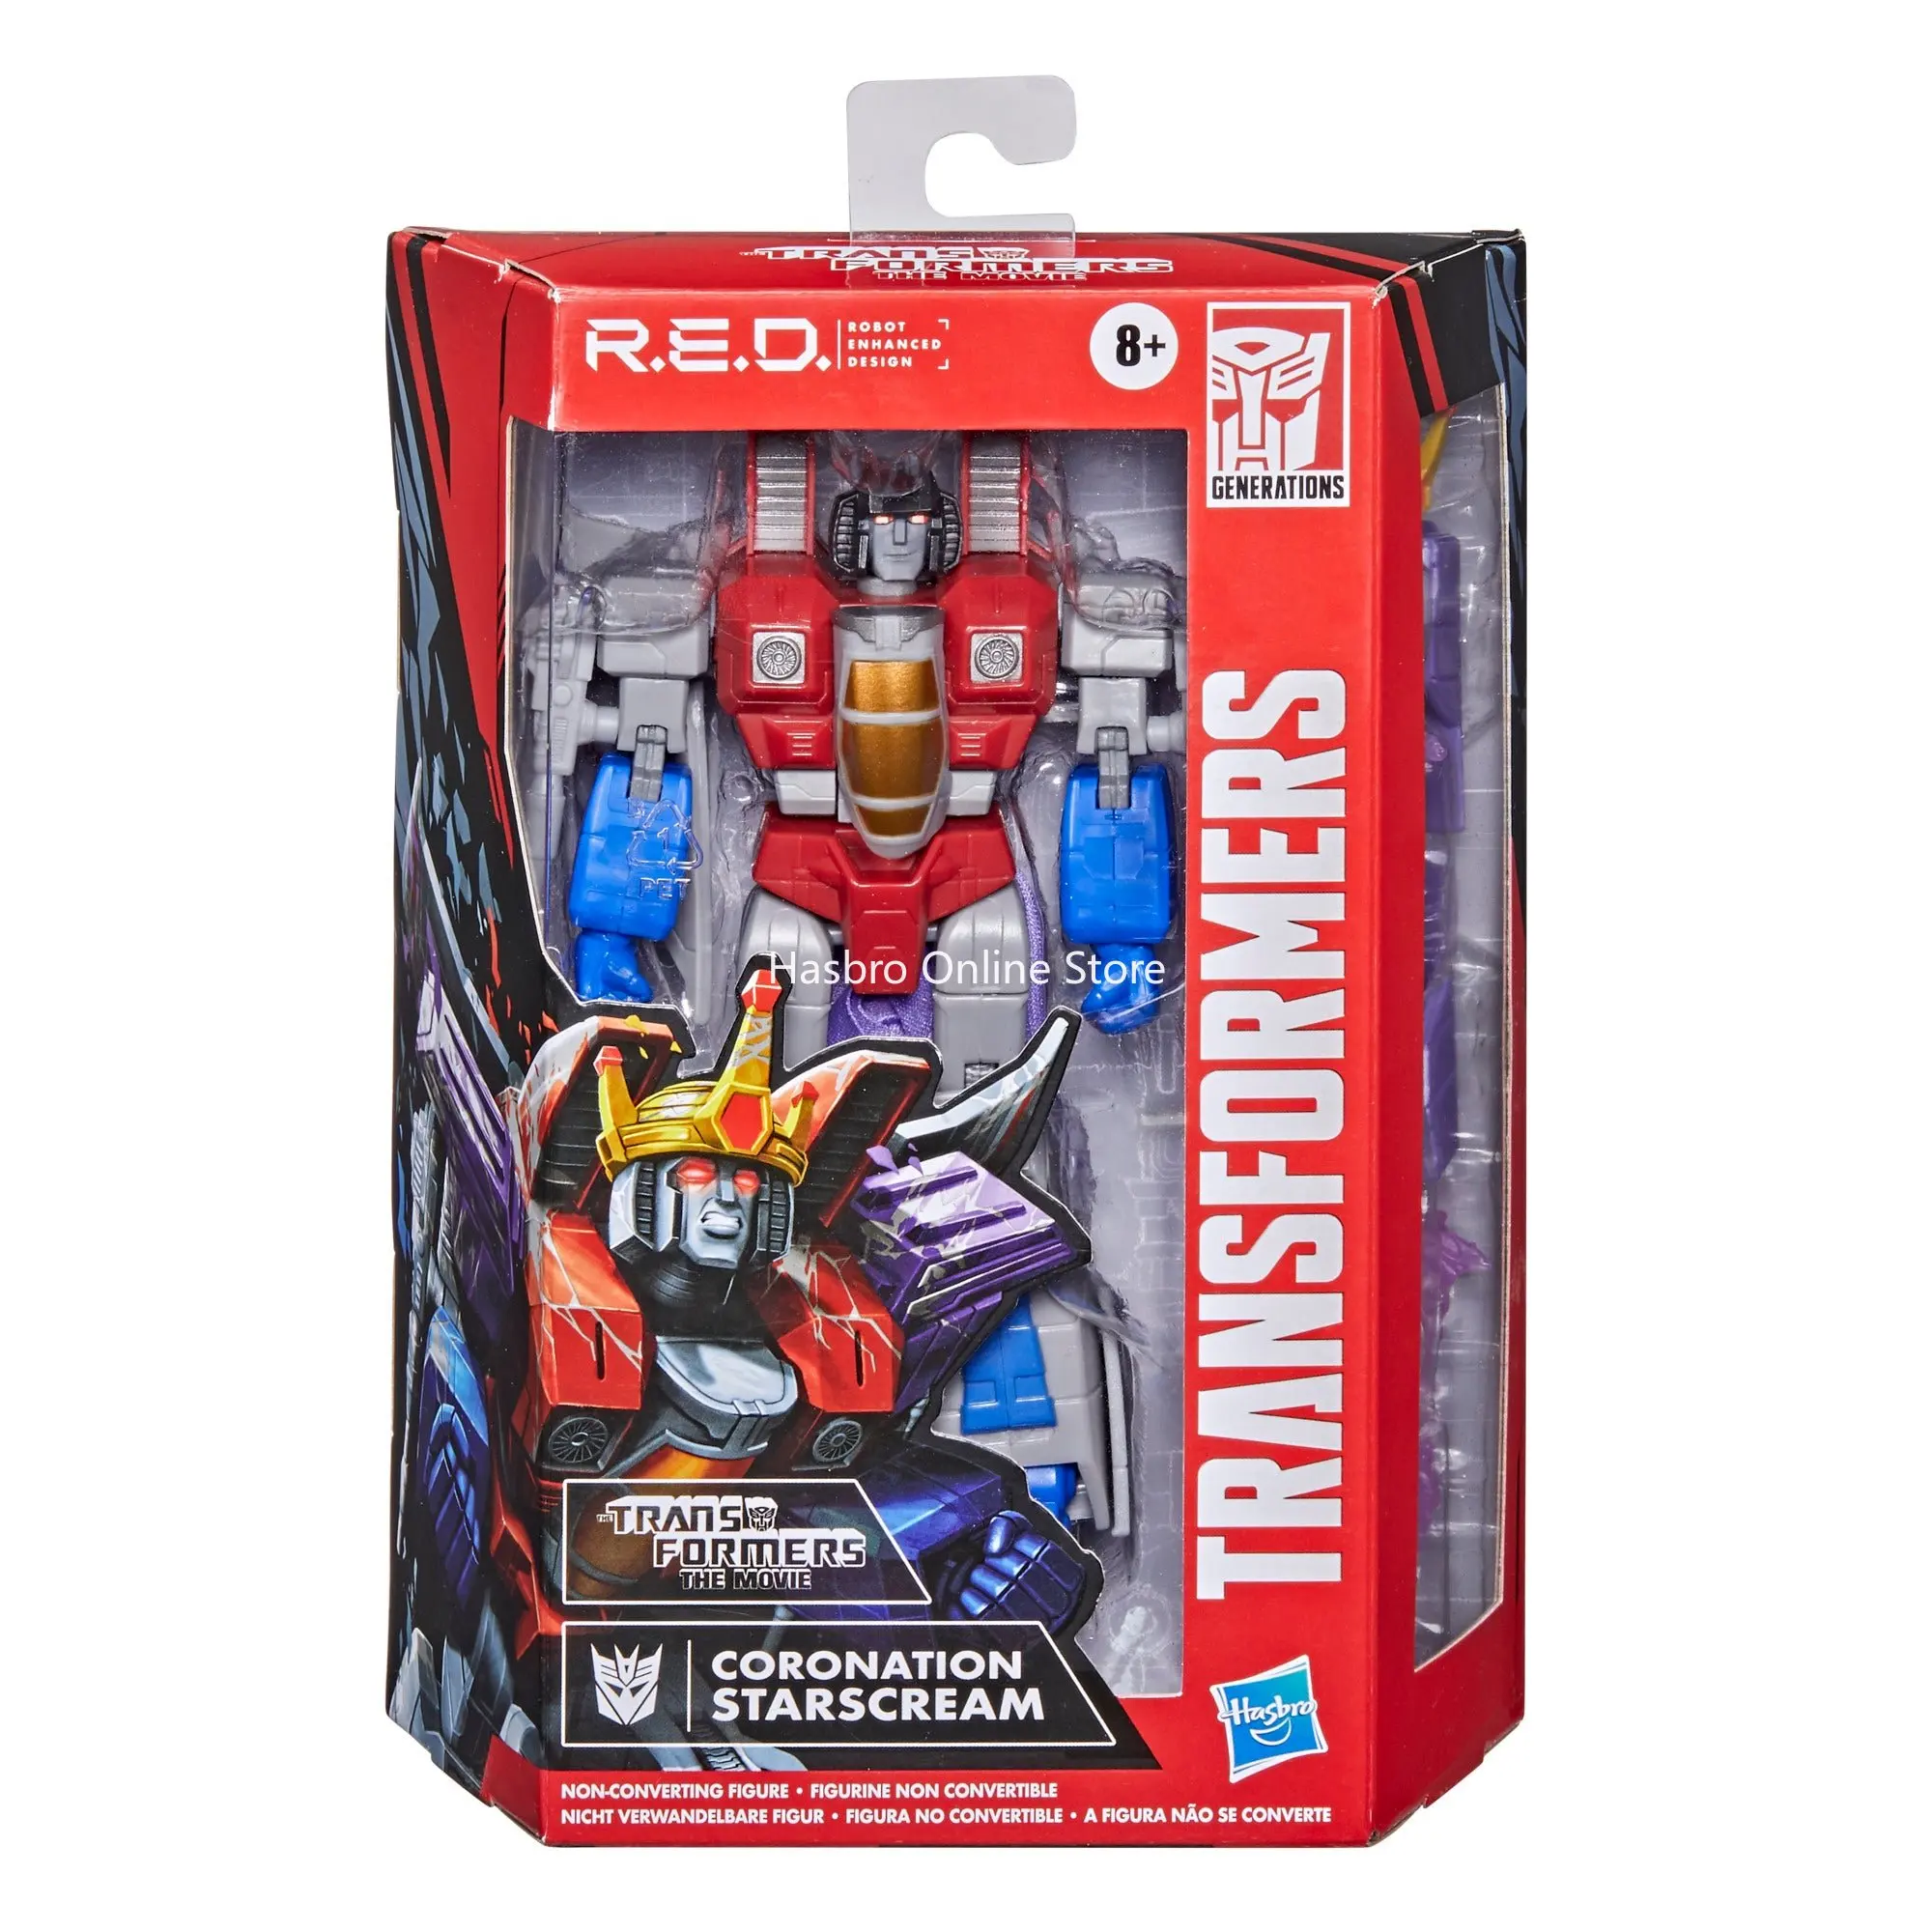 Transformers r. Transformers Optimus Prime auto-converting Programmable Robot. Трансформеры r.e.d. Hasbro ROBOSEN интеллектуальное голосовое управление трансформеры Optimus Prime. Transformer r-28 Figure.